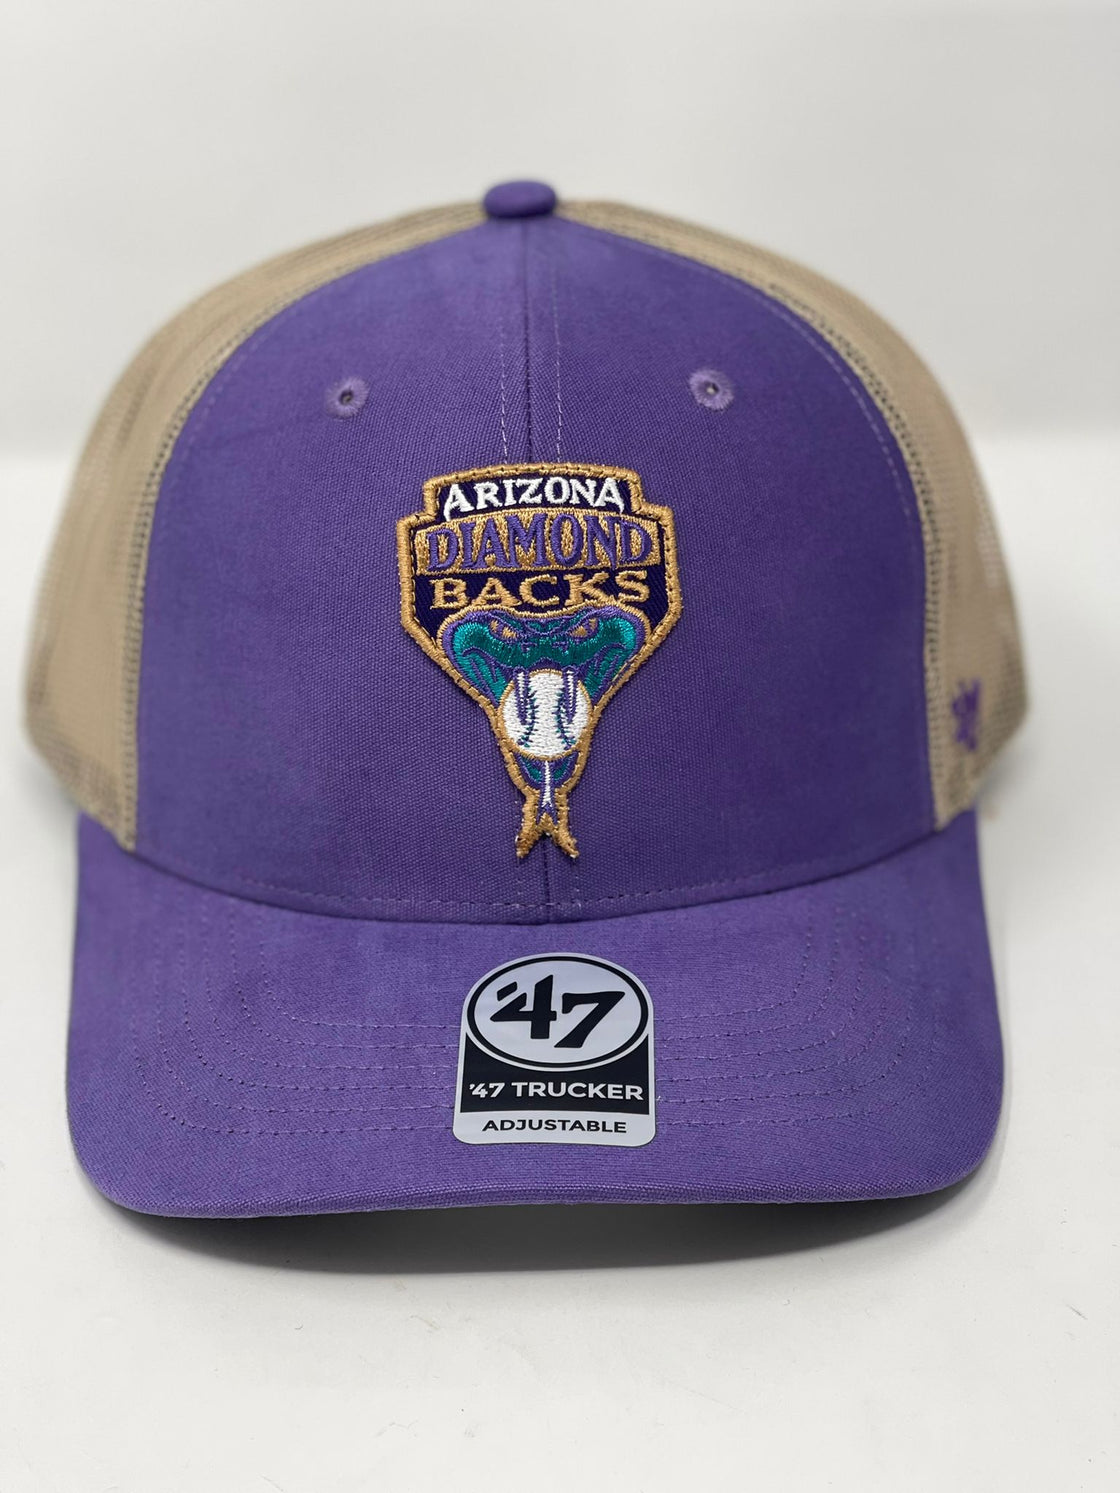 Arizona Diamondbacks '47  Trucker Snapback Hat - light purple